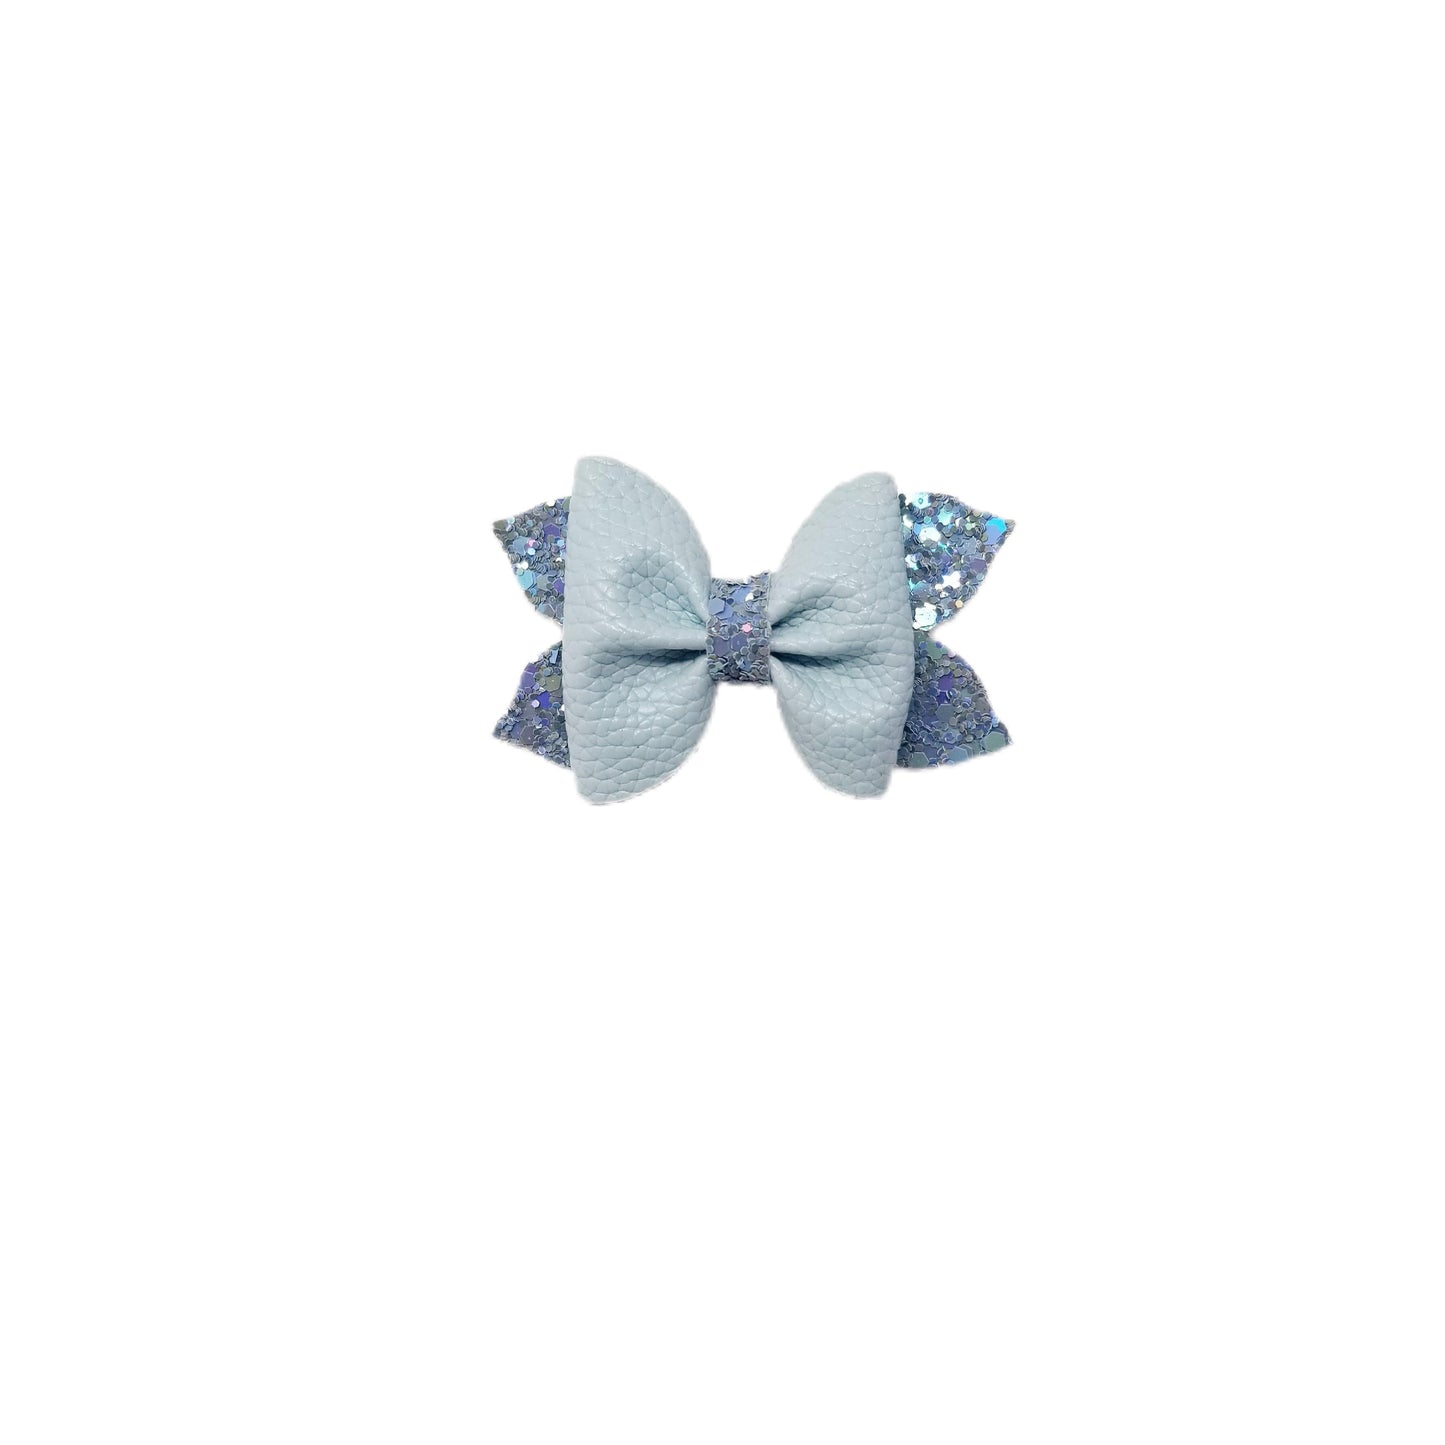 3 inch Sky Blue Pixie Pinch Bow